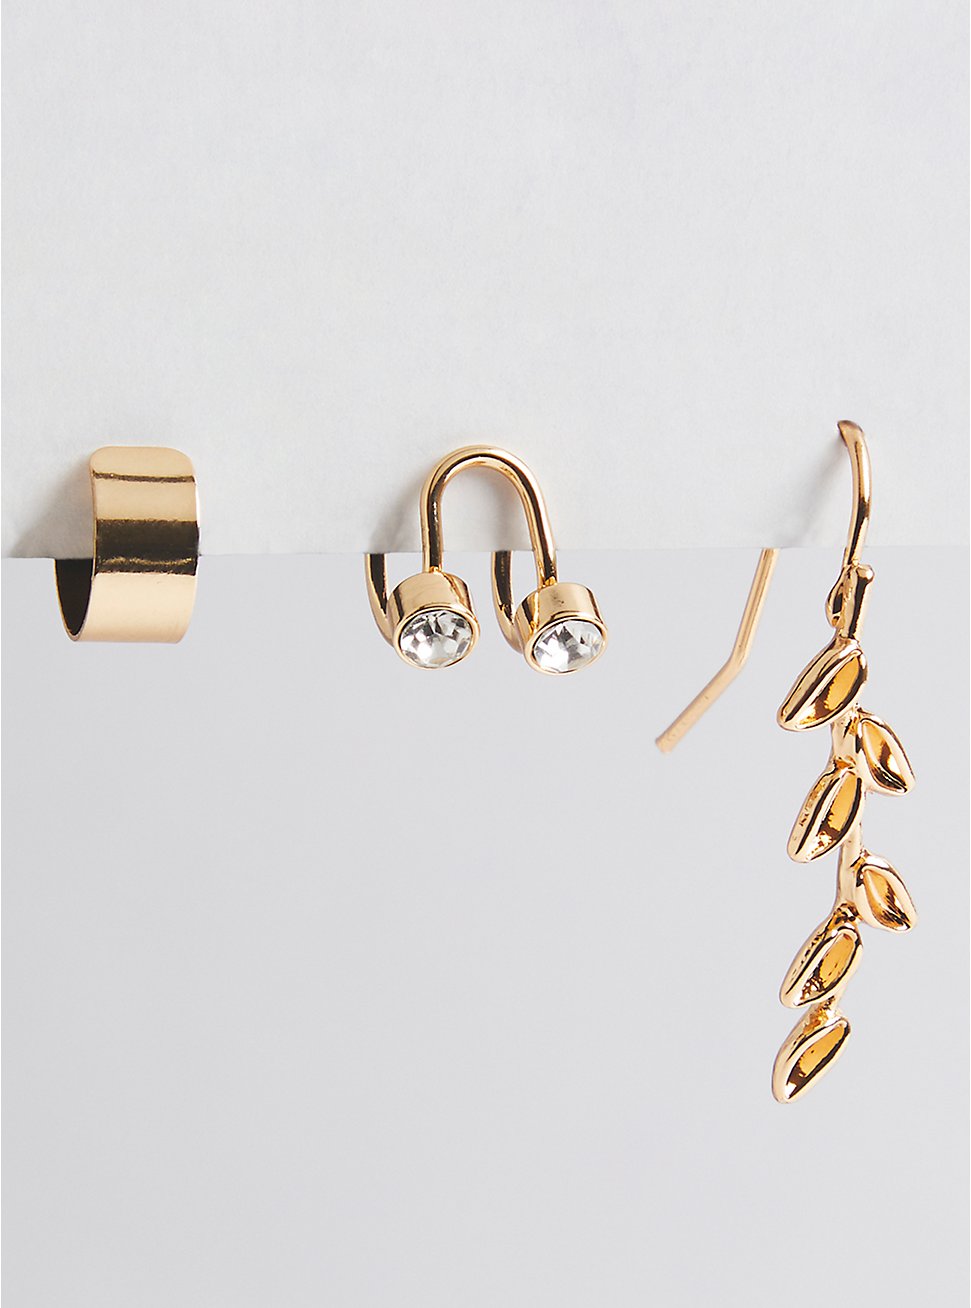 Leaf & Cuff Crawler Earring Set - Gold Tone , , hi-res